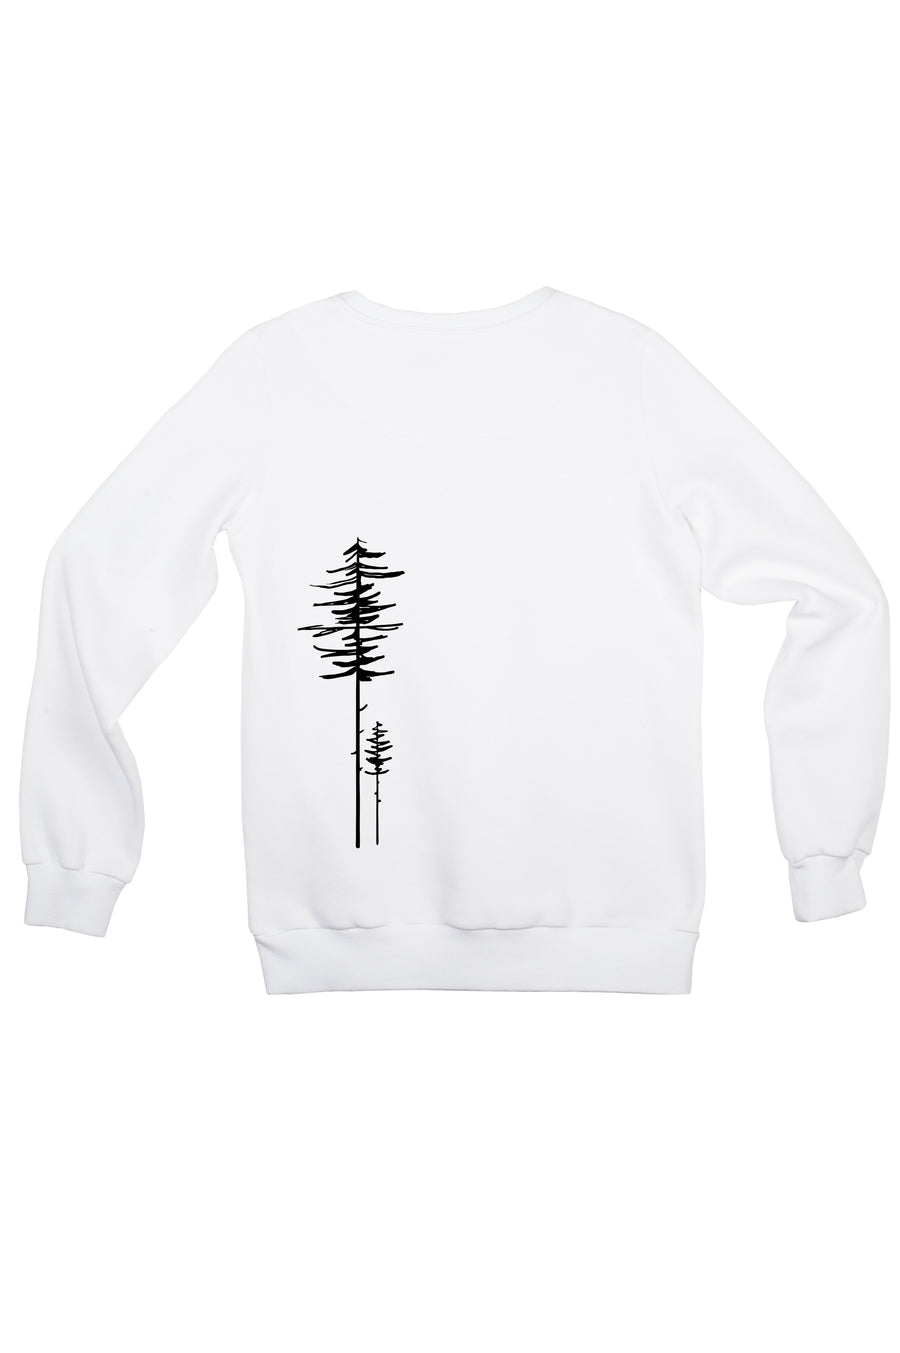 THE TREES Sweatshirt